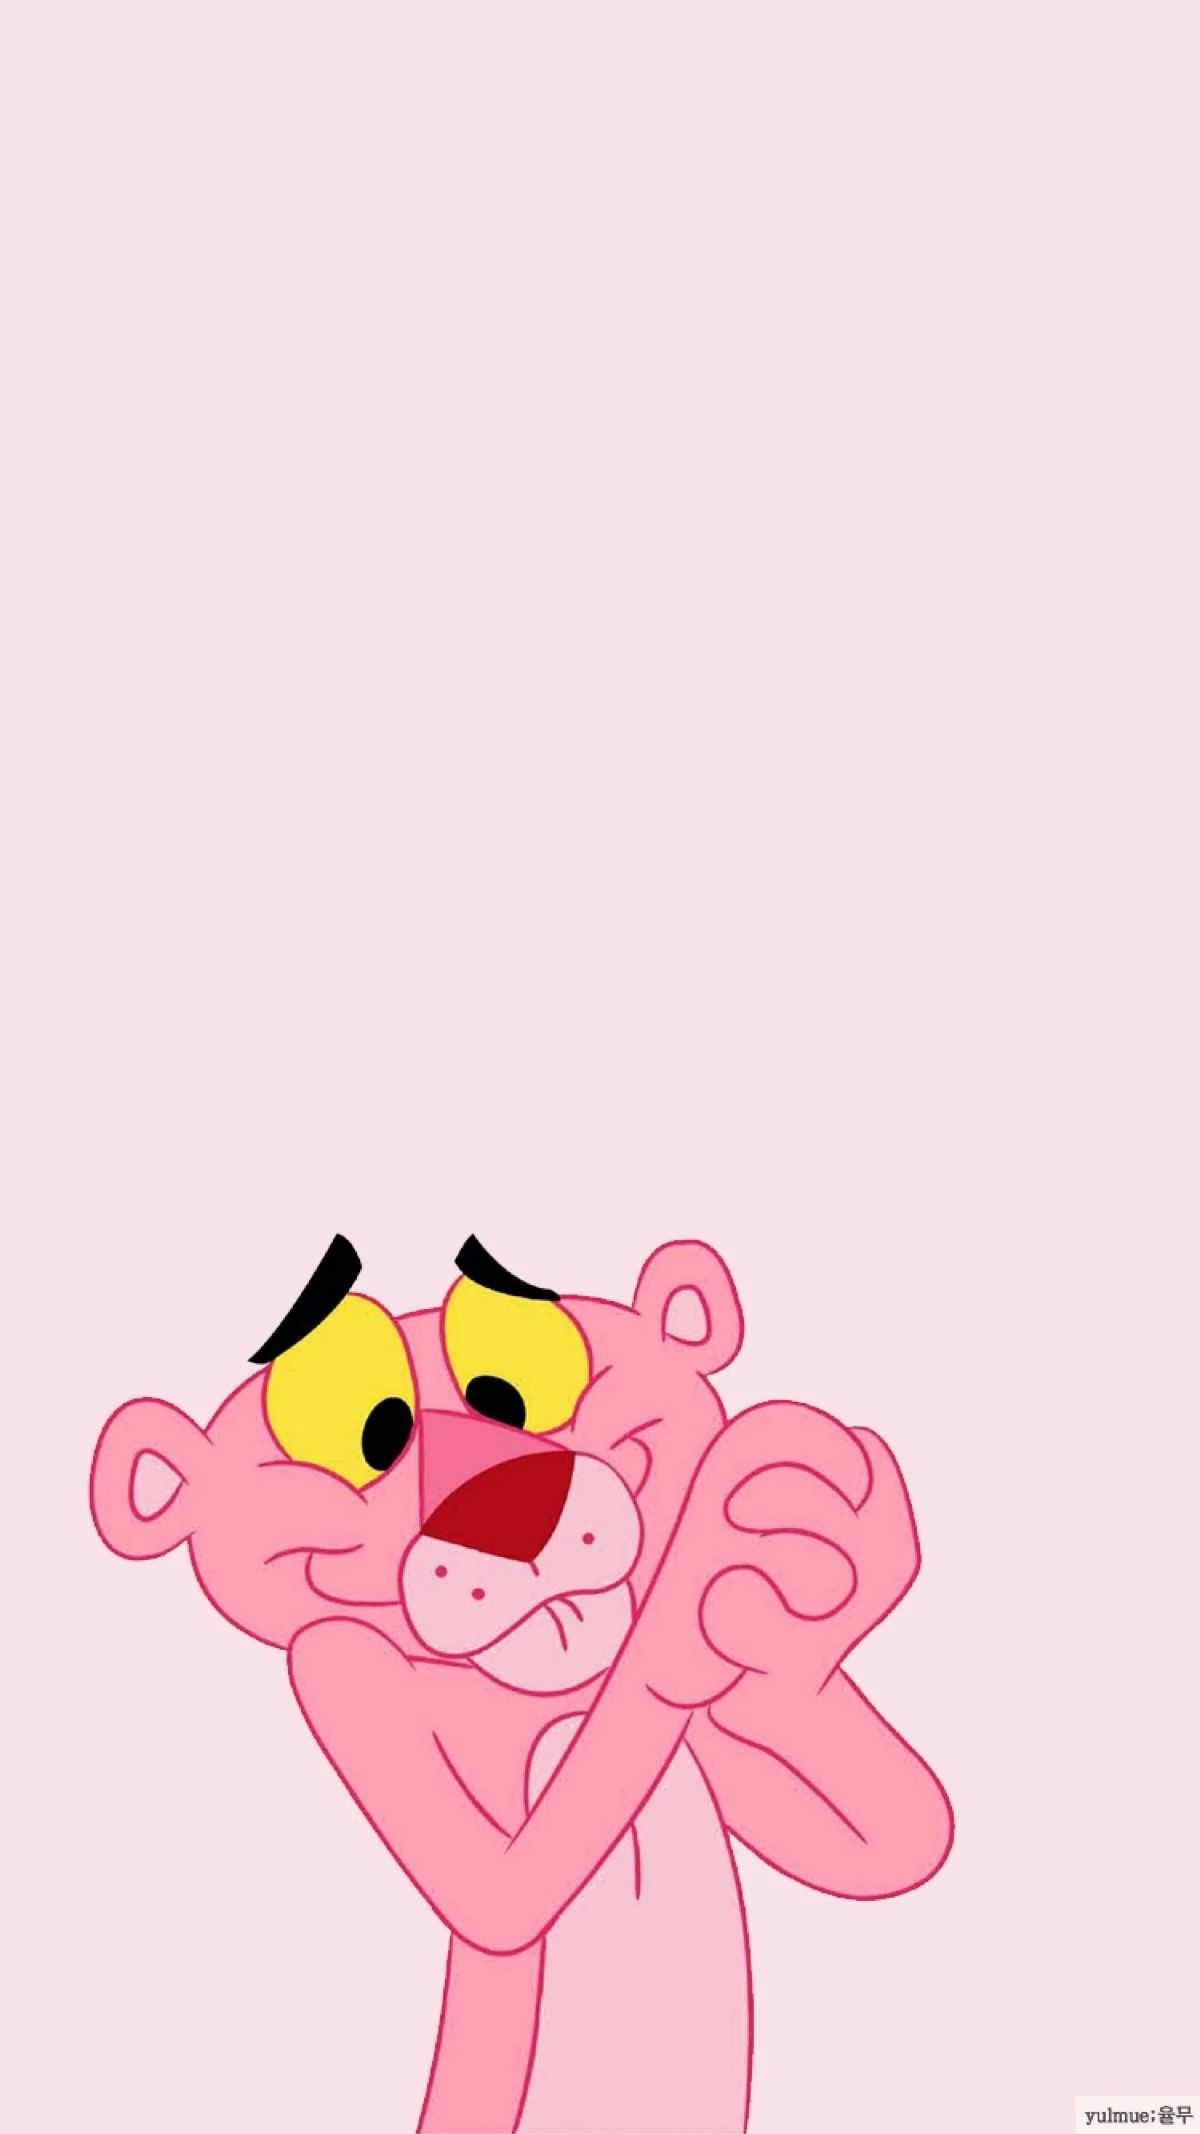 Pink Panther wallpaper. Cartoon wallpaper iphone, Wallpaper iphone cute, Funny phone wallpaper